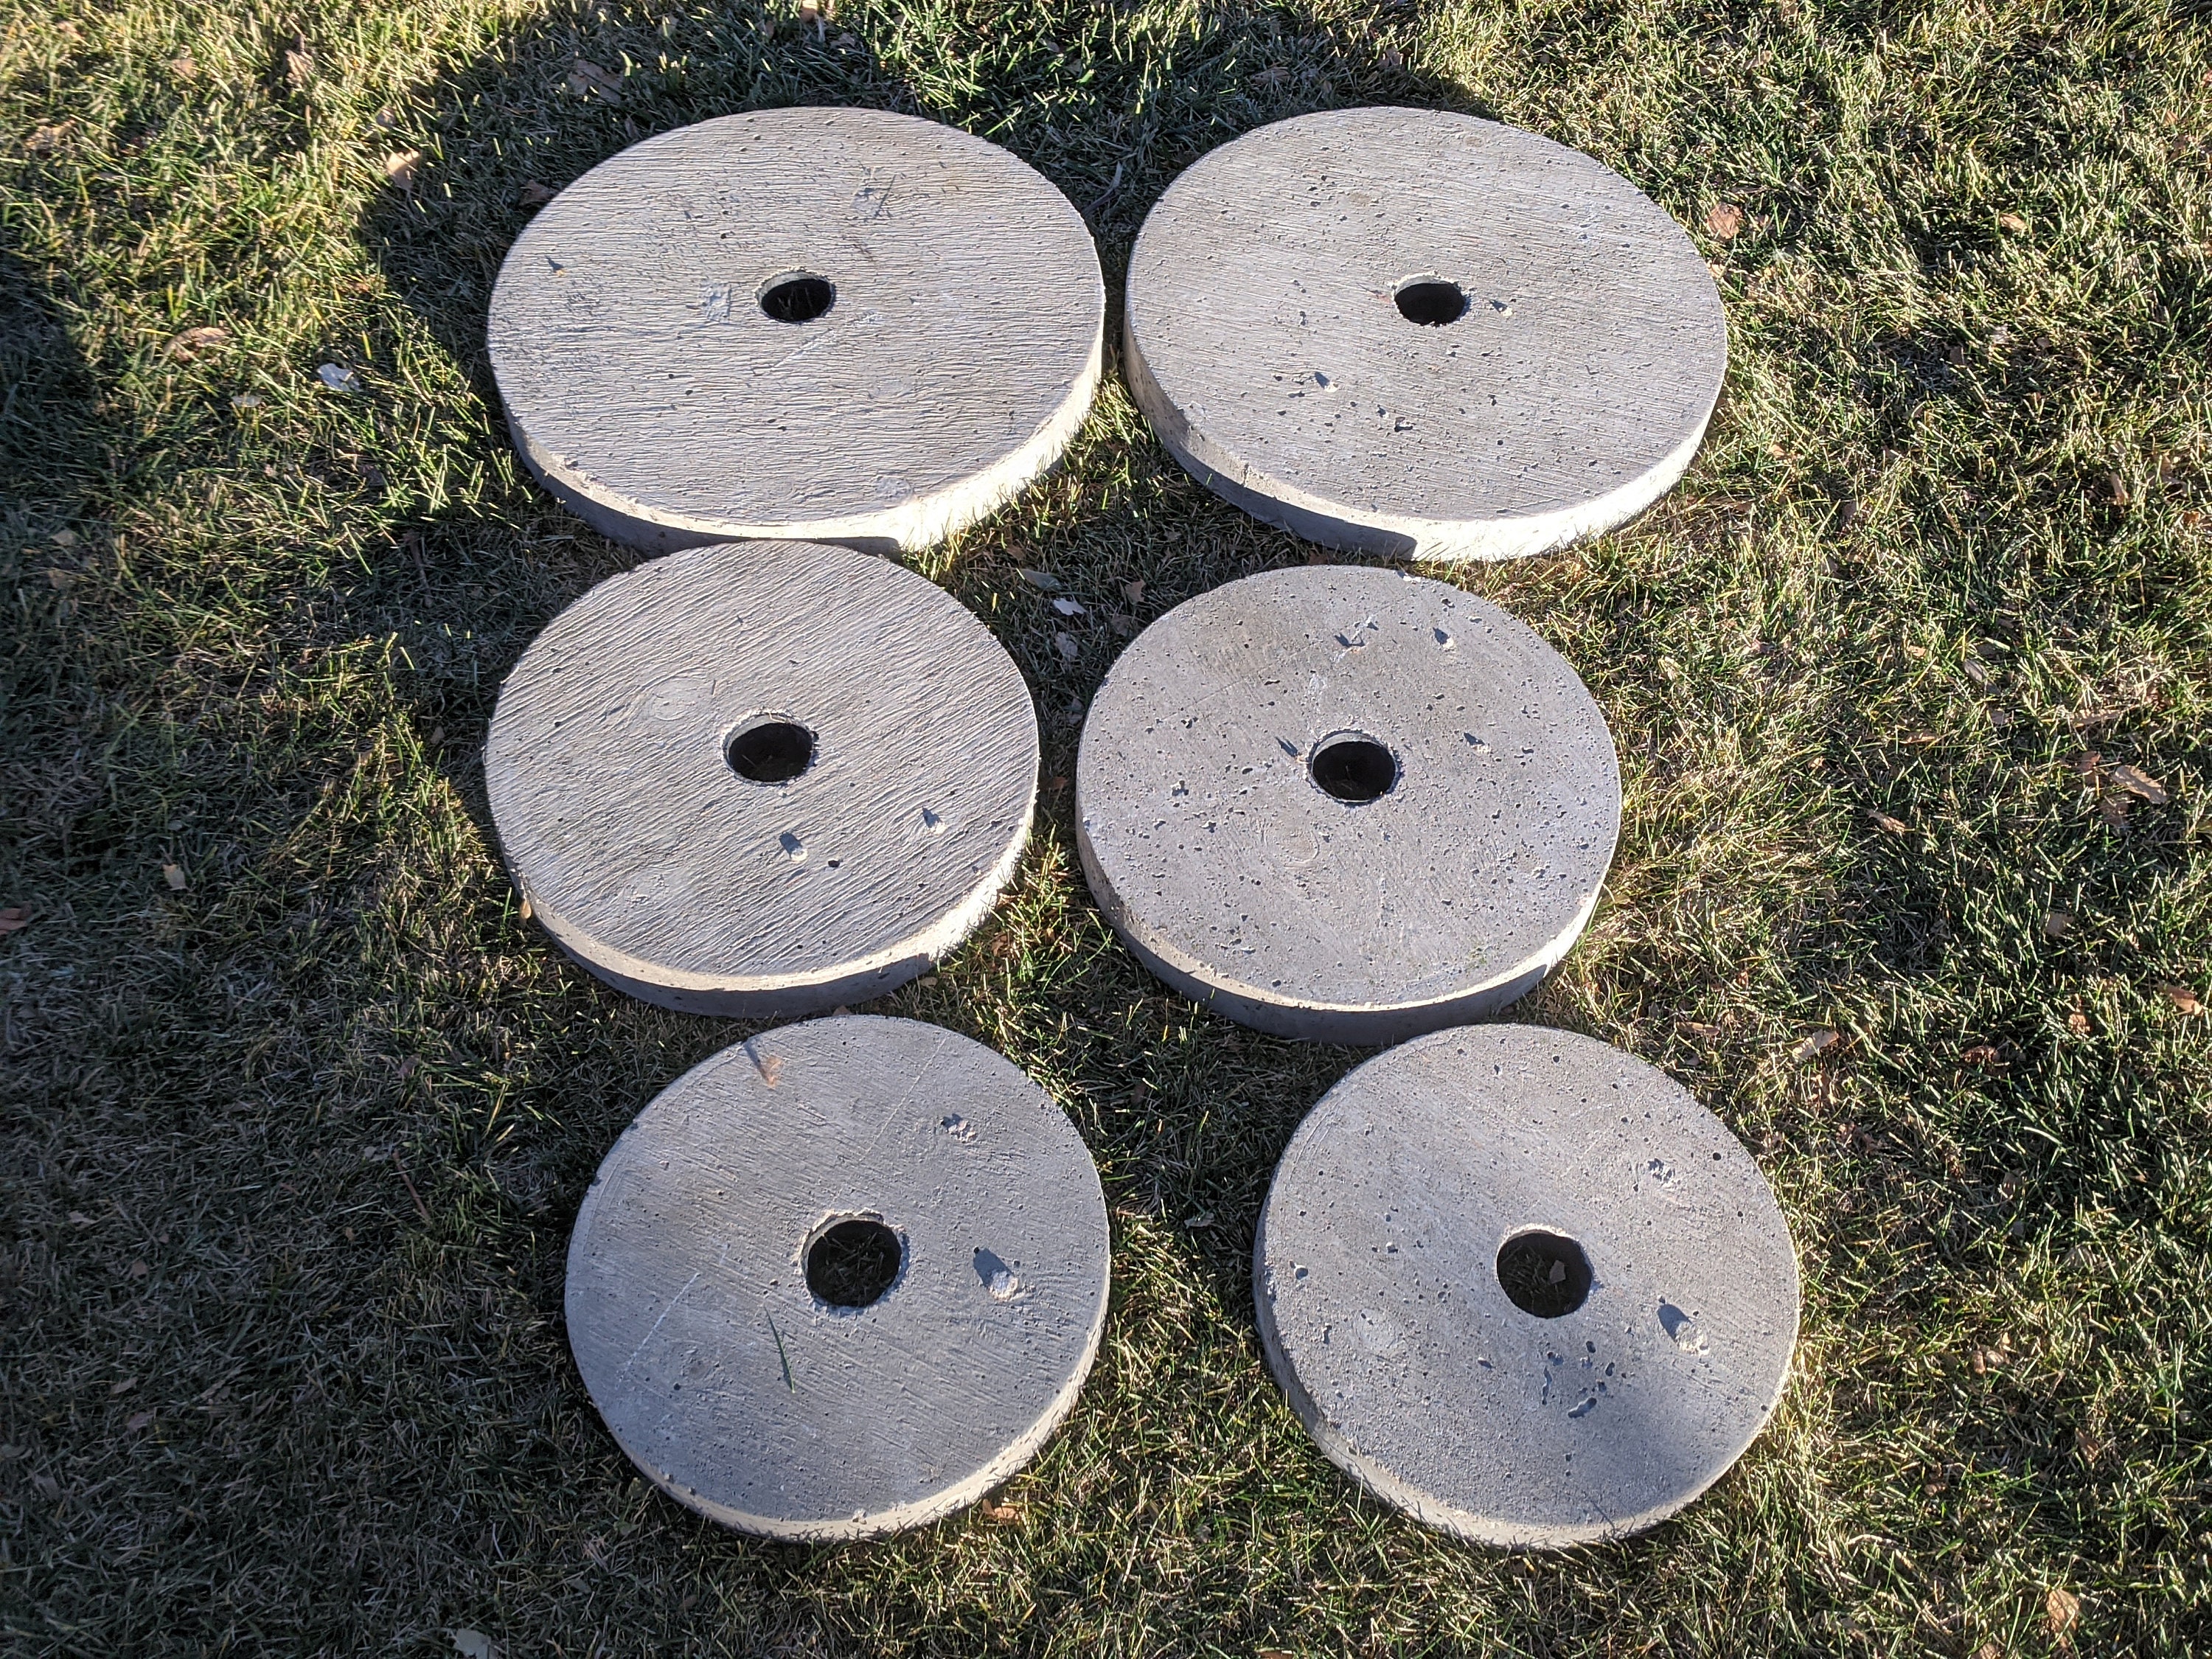 Digital Files .stl .obj Files to 3D Print Concrete Weight Molds 5LB 10LB  25LB 45LB Most Common Imperial Pounds Cement 